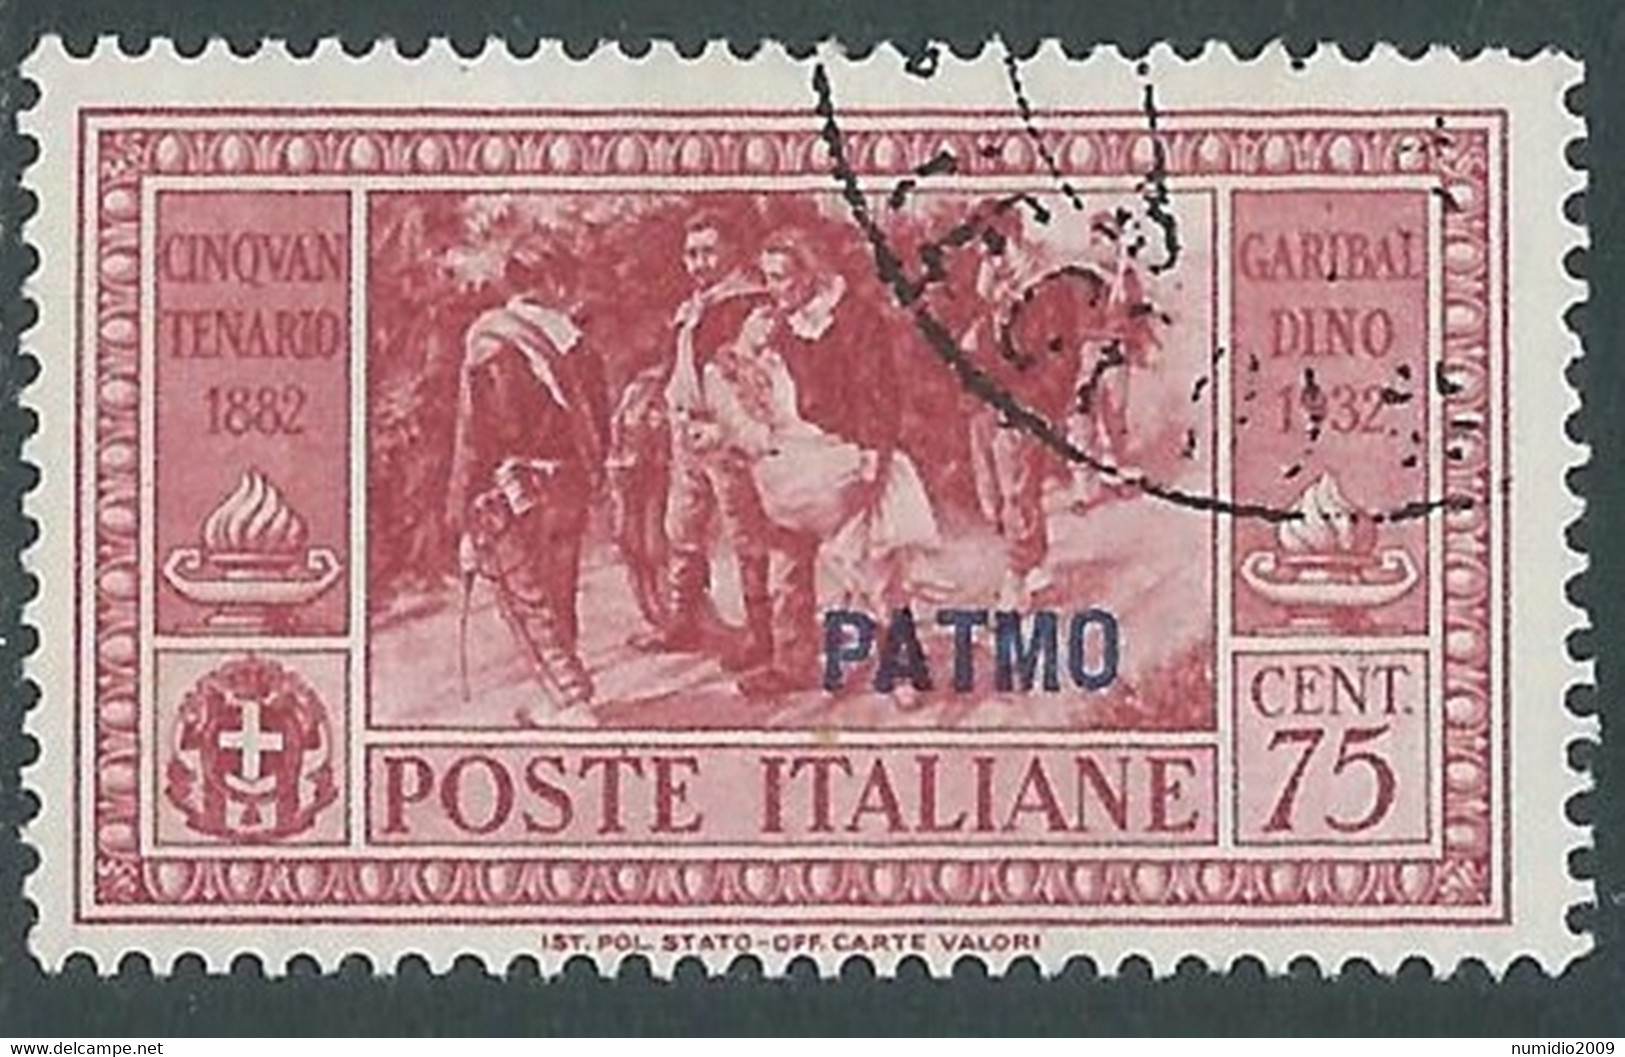 1932 EGEO PATMO USATO GARIBALDI 75 CENT - RA11-5 - Egée (Patmo)